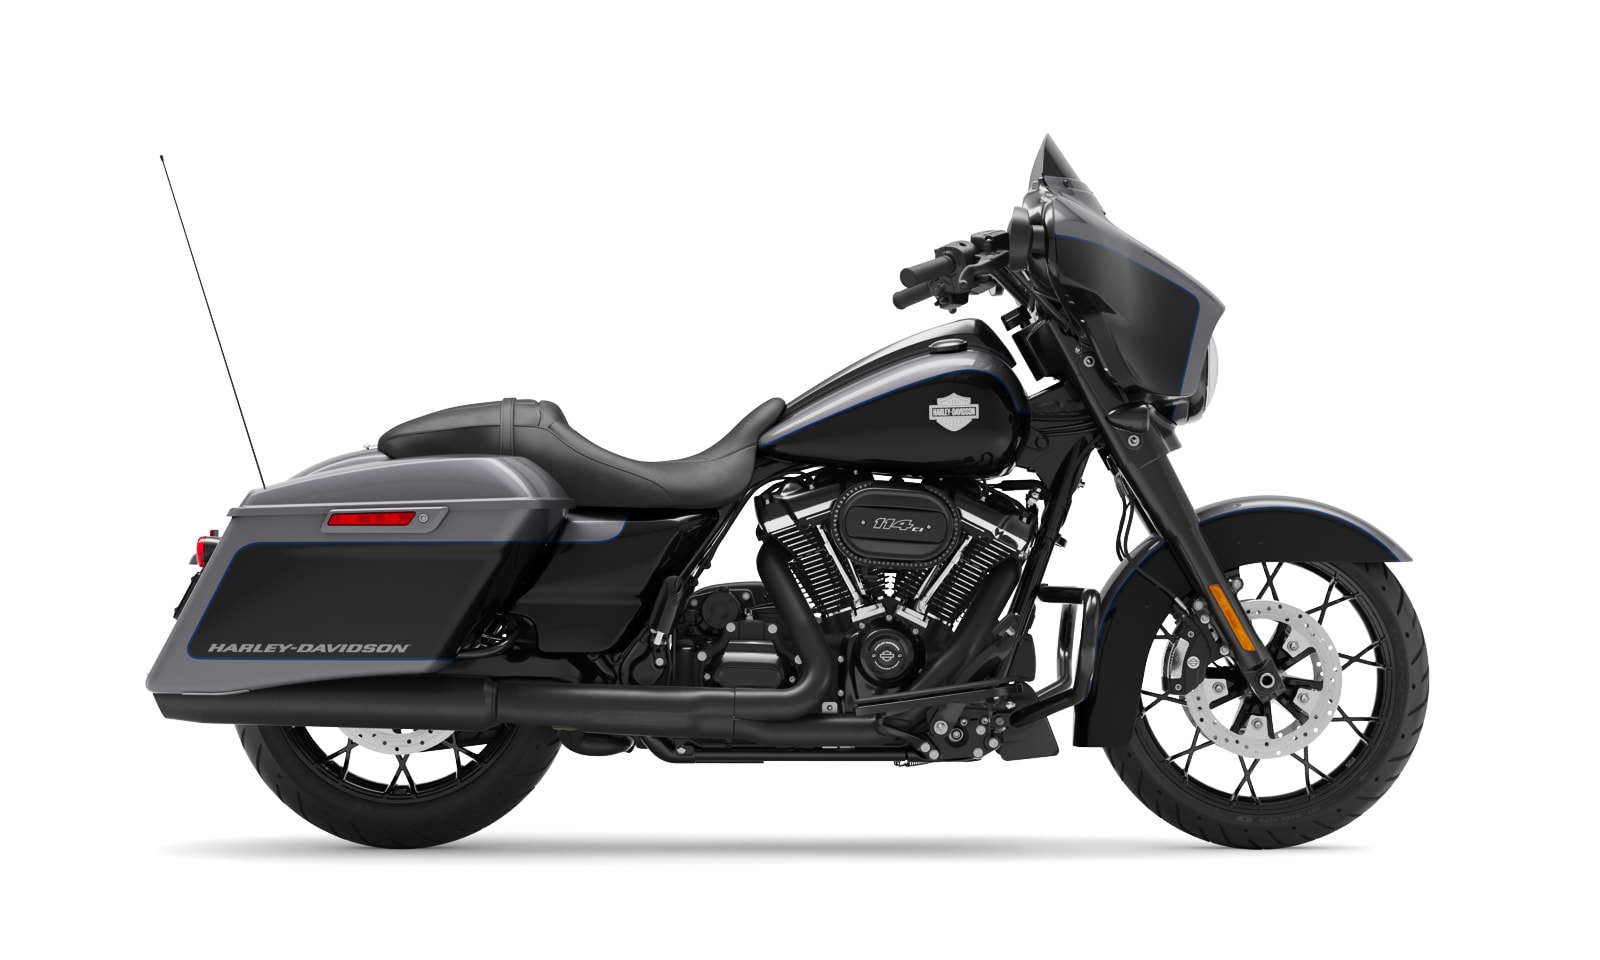 Motorrad Vergleich Harley Davidson Cvo Street Glide Flhxse 2020 Vs Harley Davidson Street Glide Flhx 2020